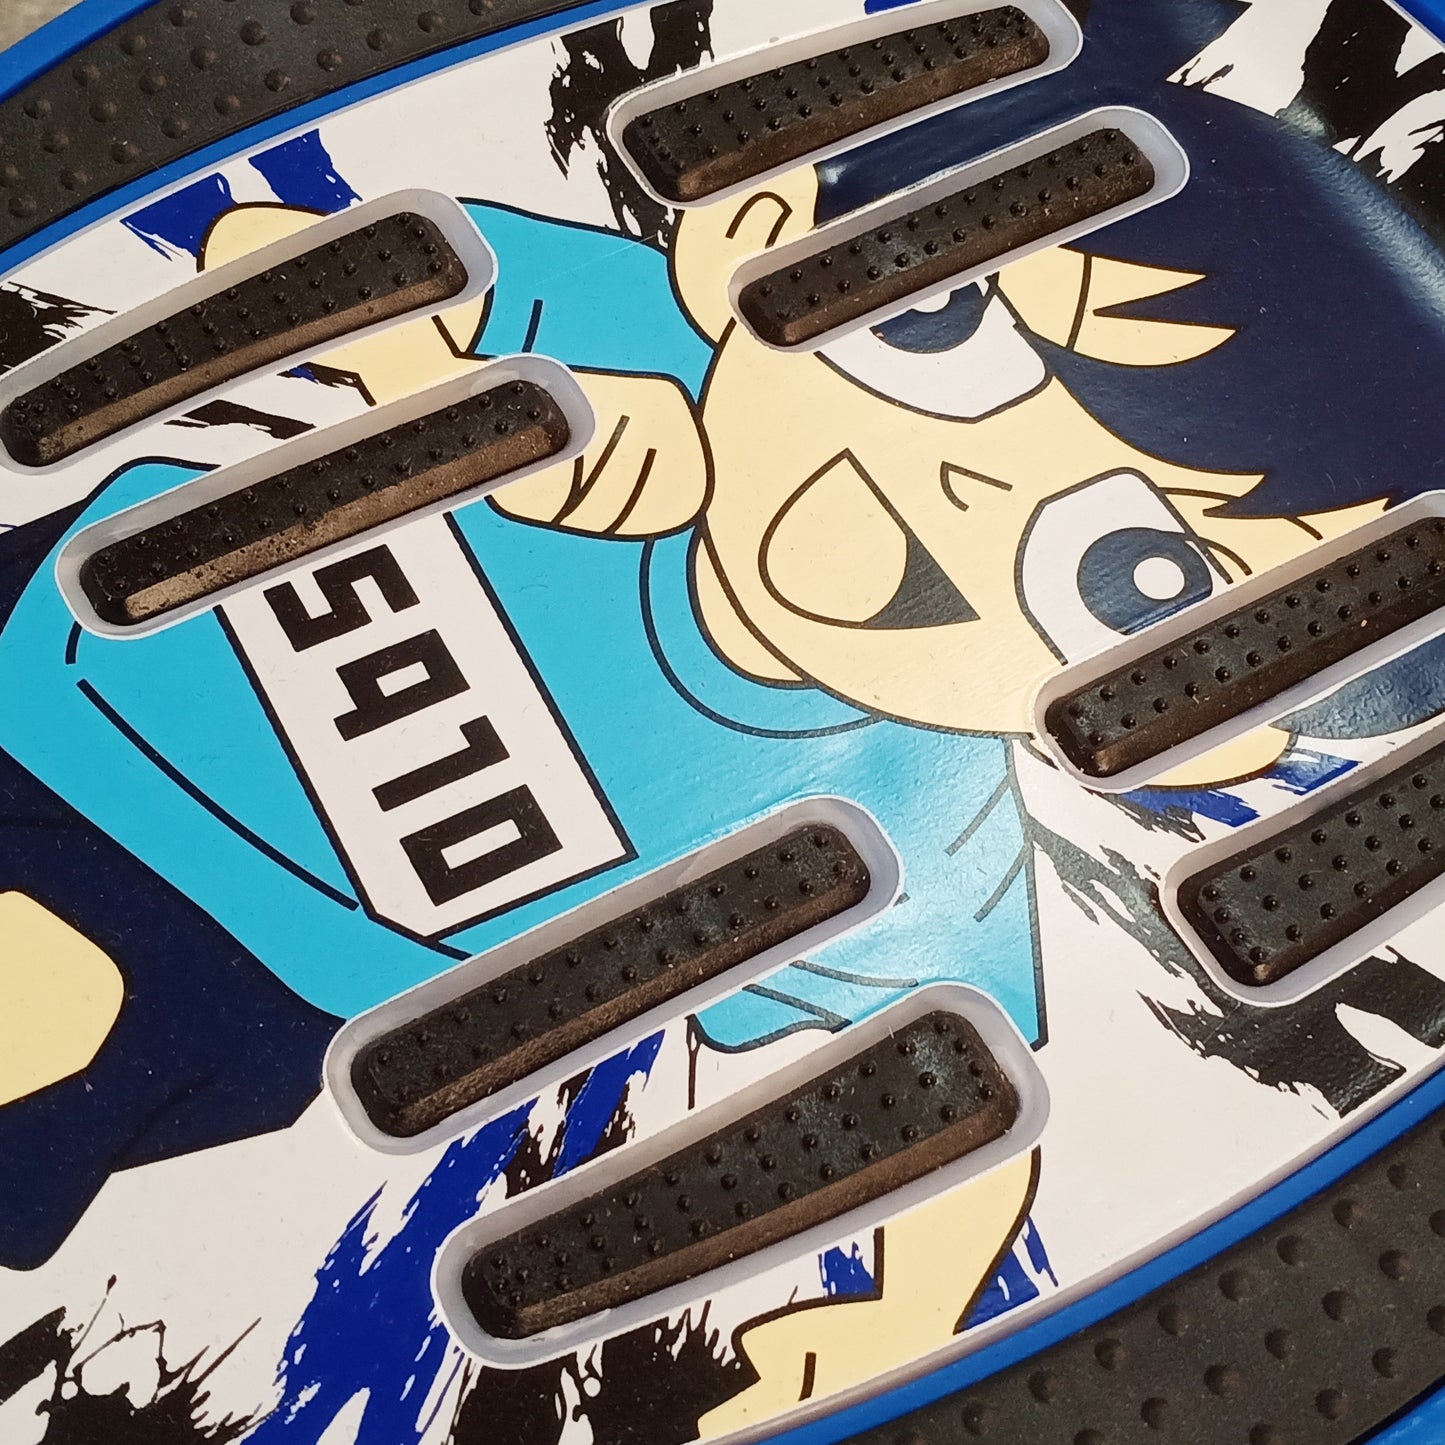 Nivia 31 x 8 Waveboard Skate board - Blue (for upto 80 Kg) - Best Price online Prokicksports.com